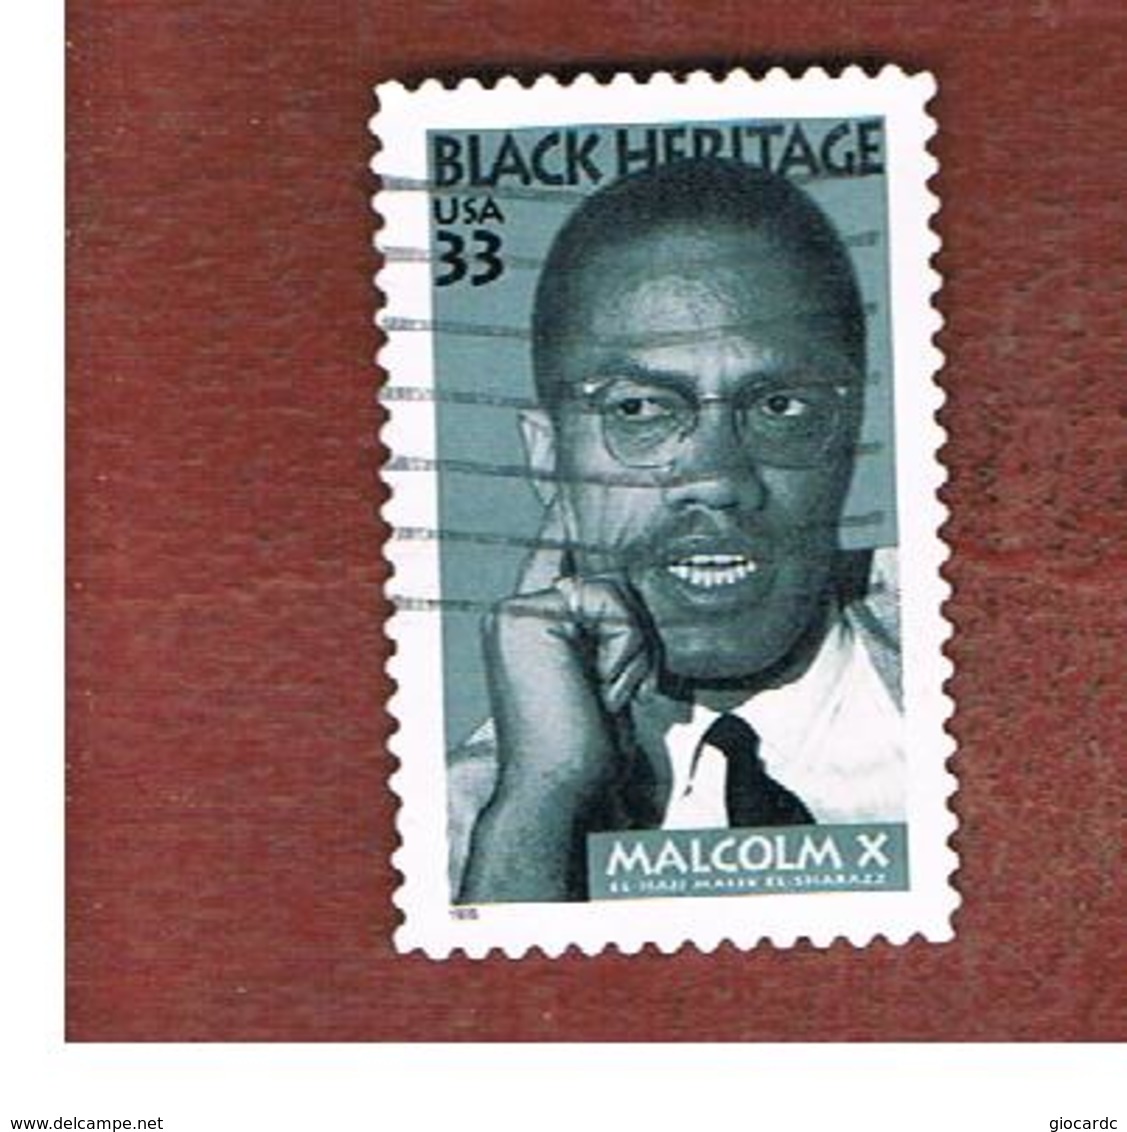 STATI UNITI (U.S.A.) - SG 3546  - 1999  BLACK HERITAGE: MALCOM X, BLACK LEADER - USED - Gebraucht